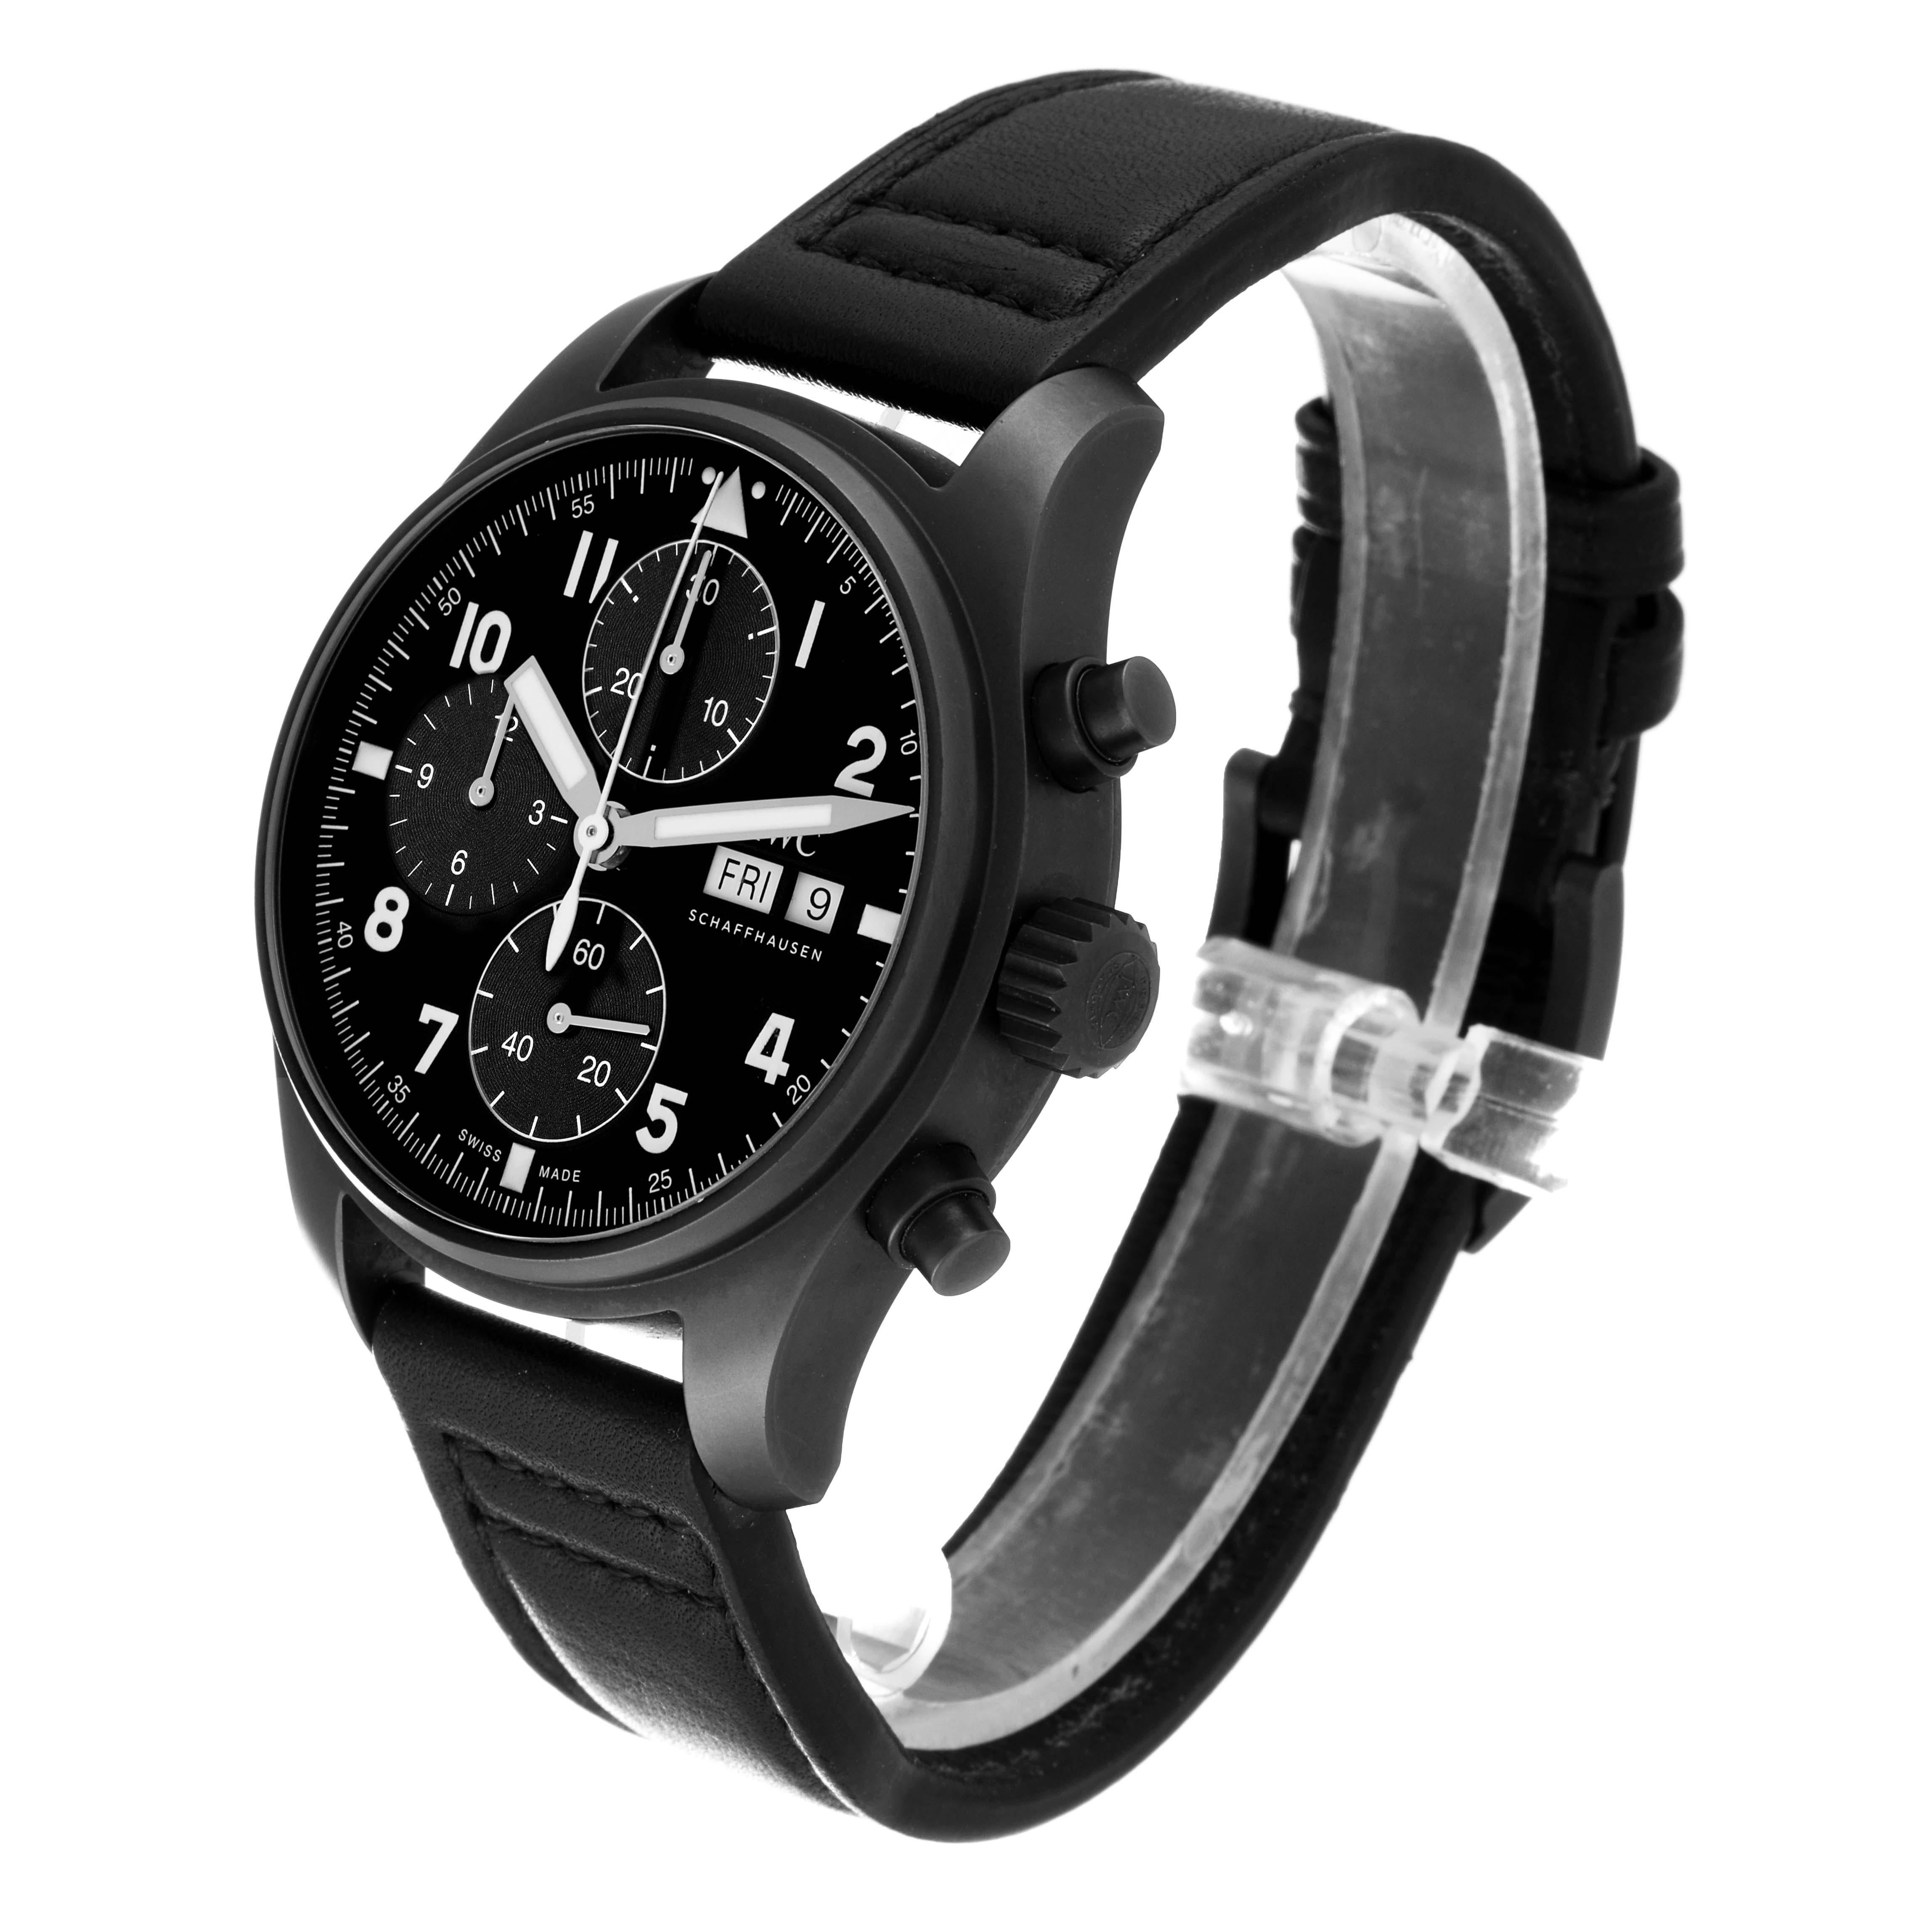 IWC Pilot Chronograph Tribute to 3705 Limited Edition Ceratanium Mens Watch 1